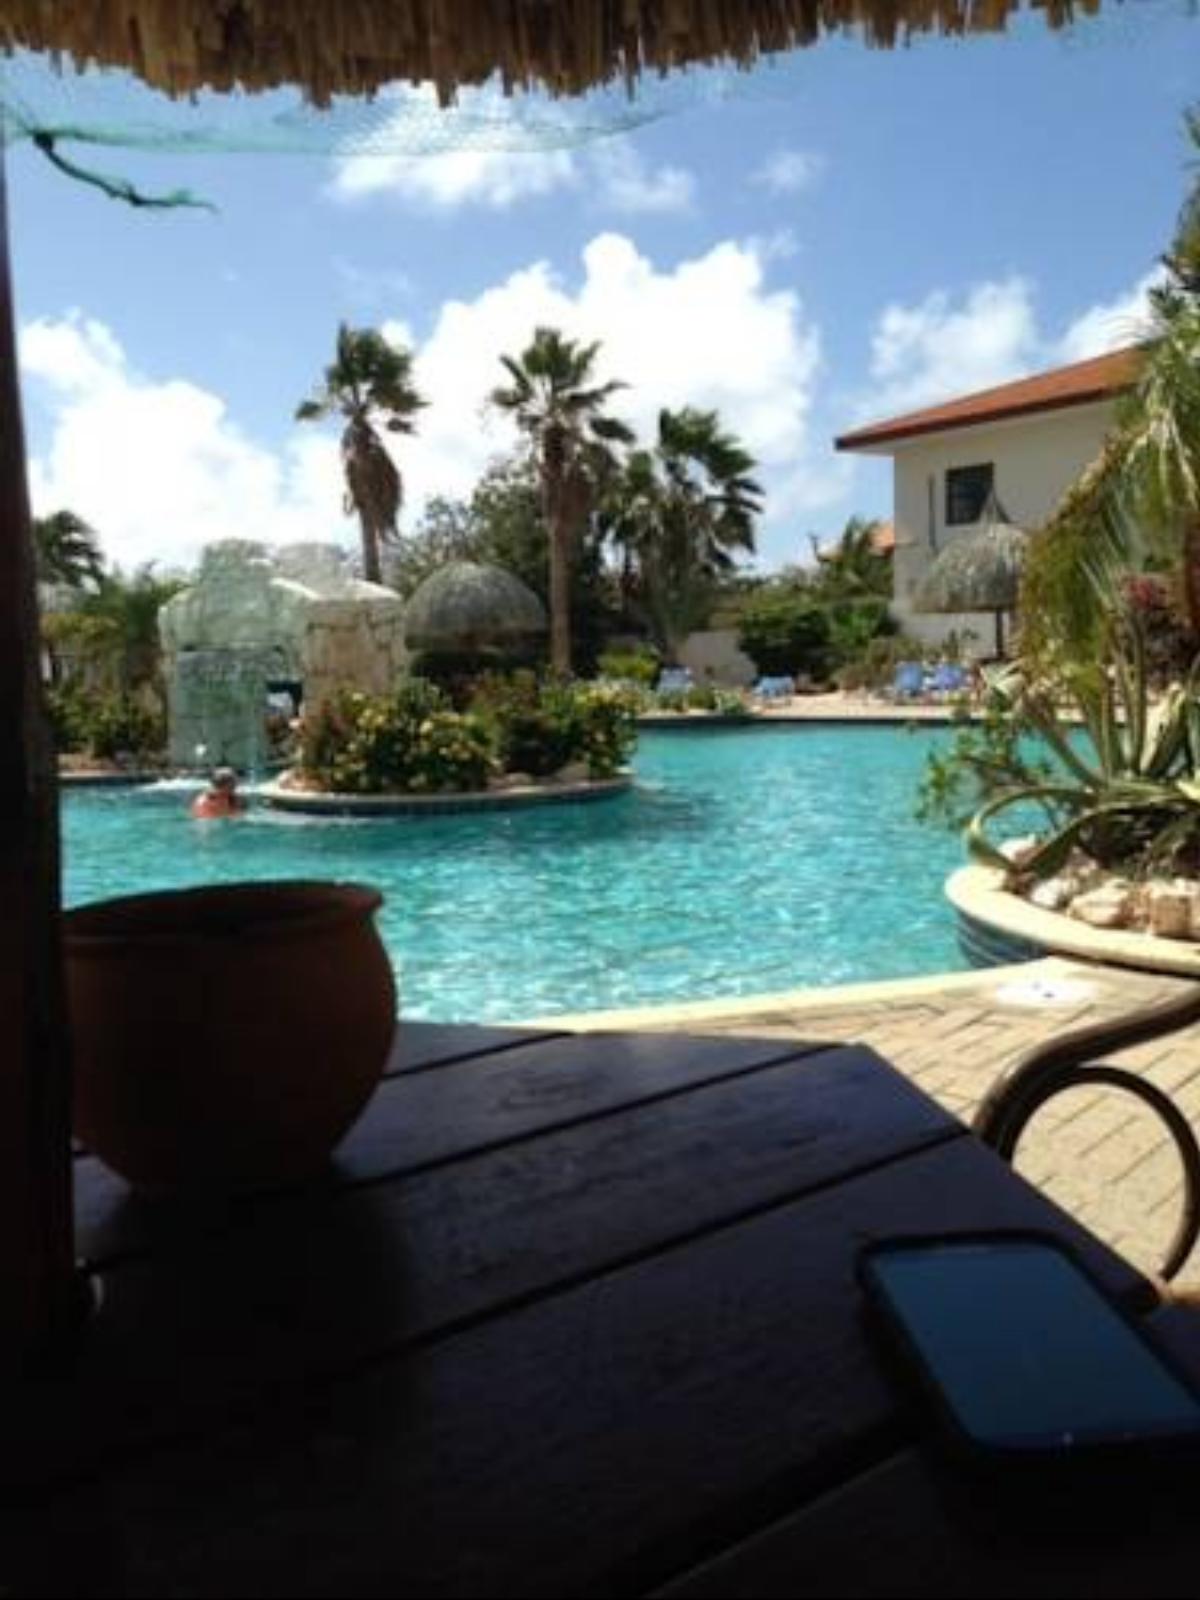 Paradise Hotel Willemstad Netherlands Antilles